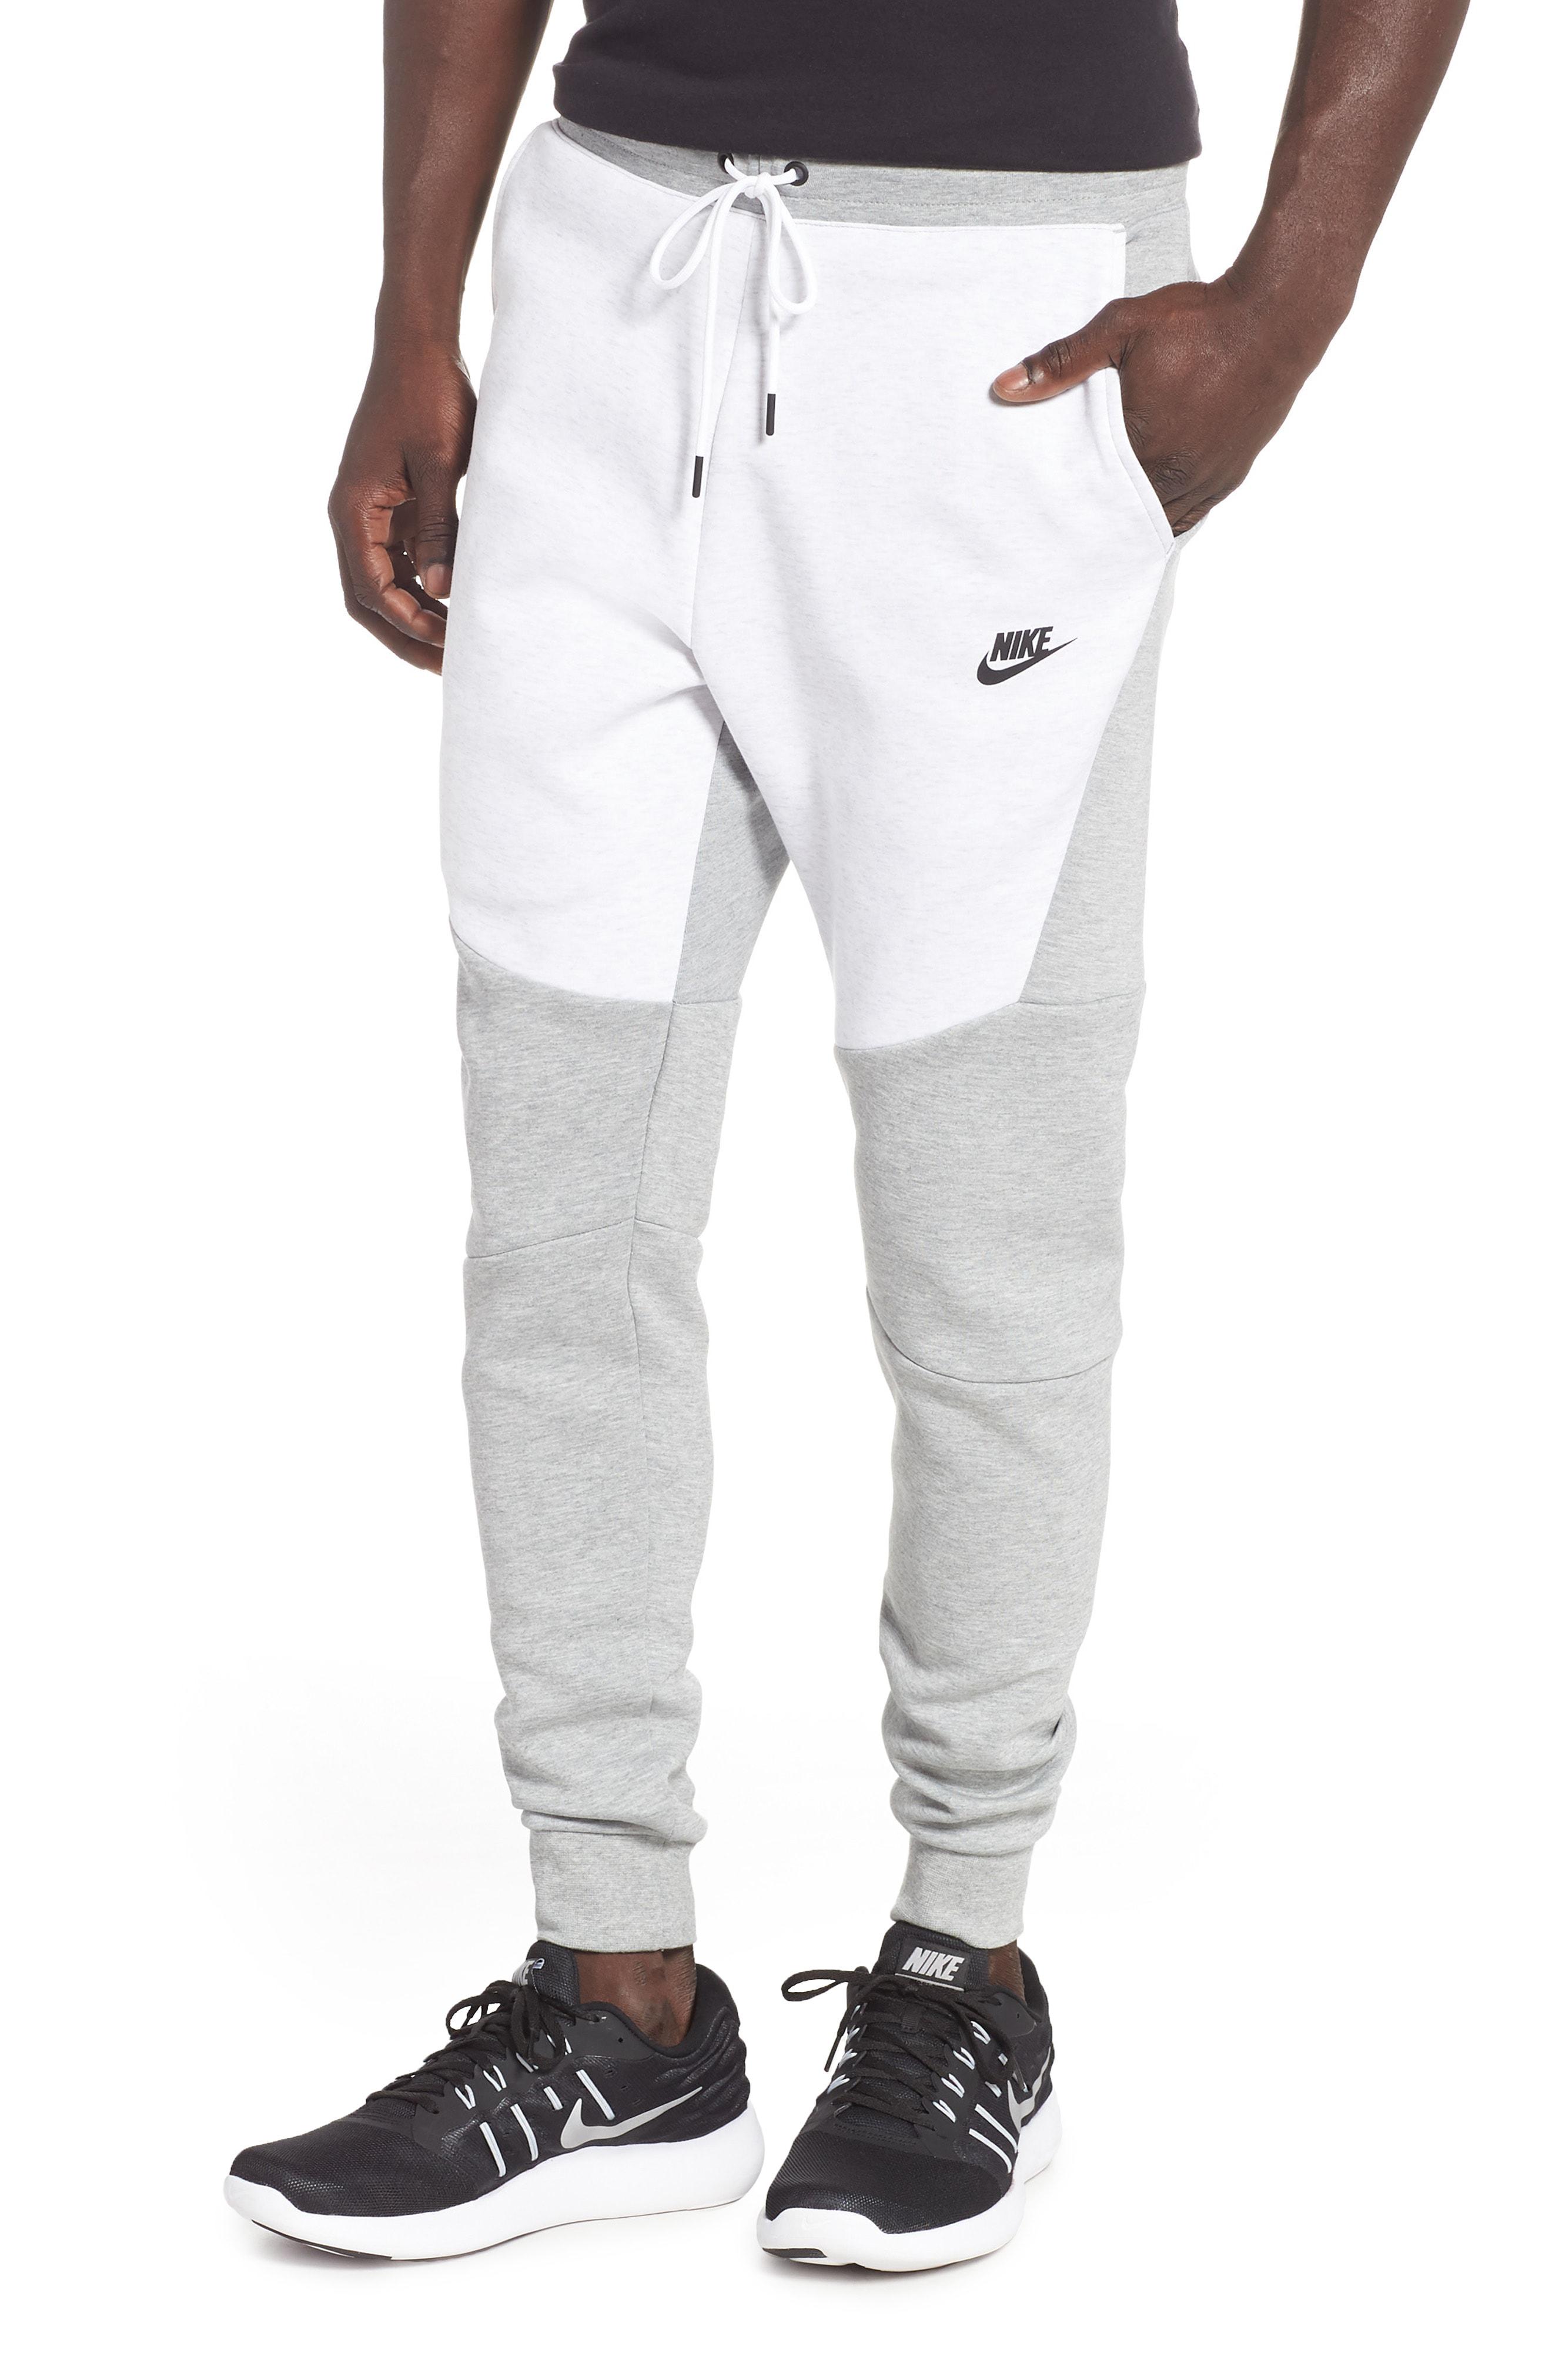 grey and white nike tech pants